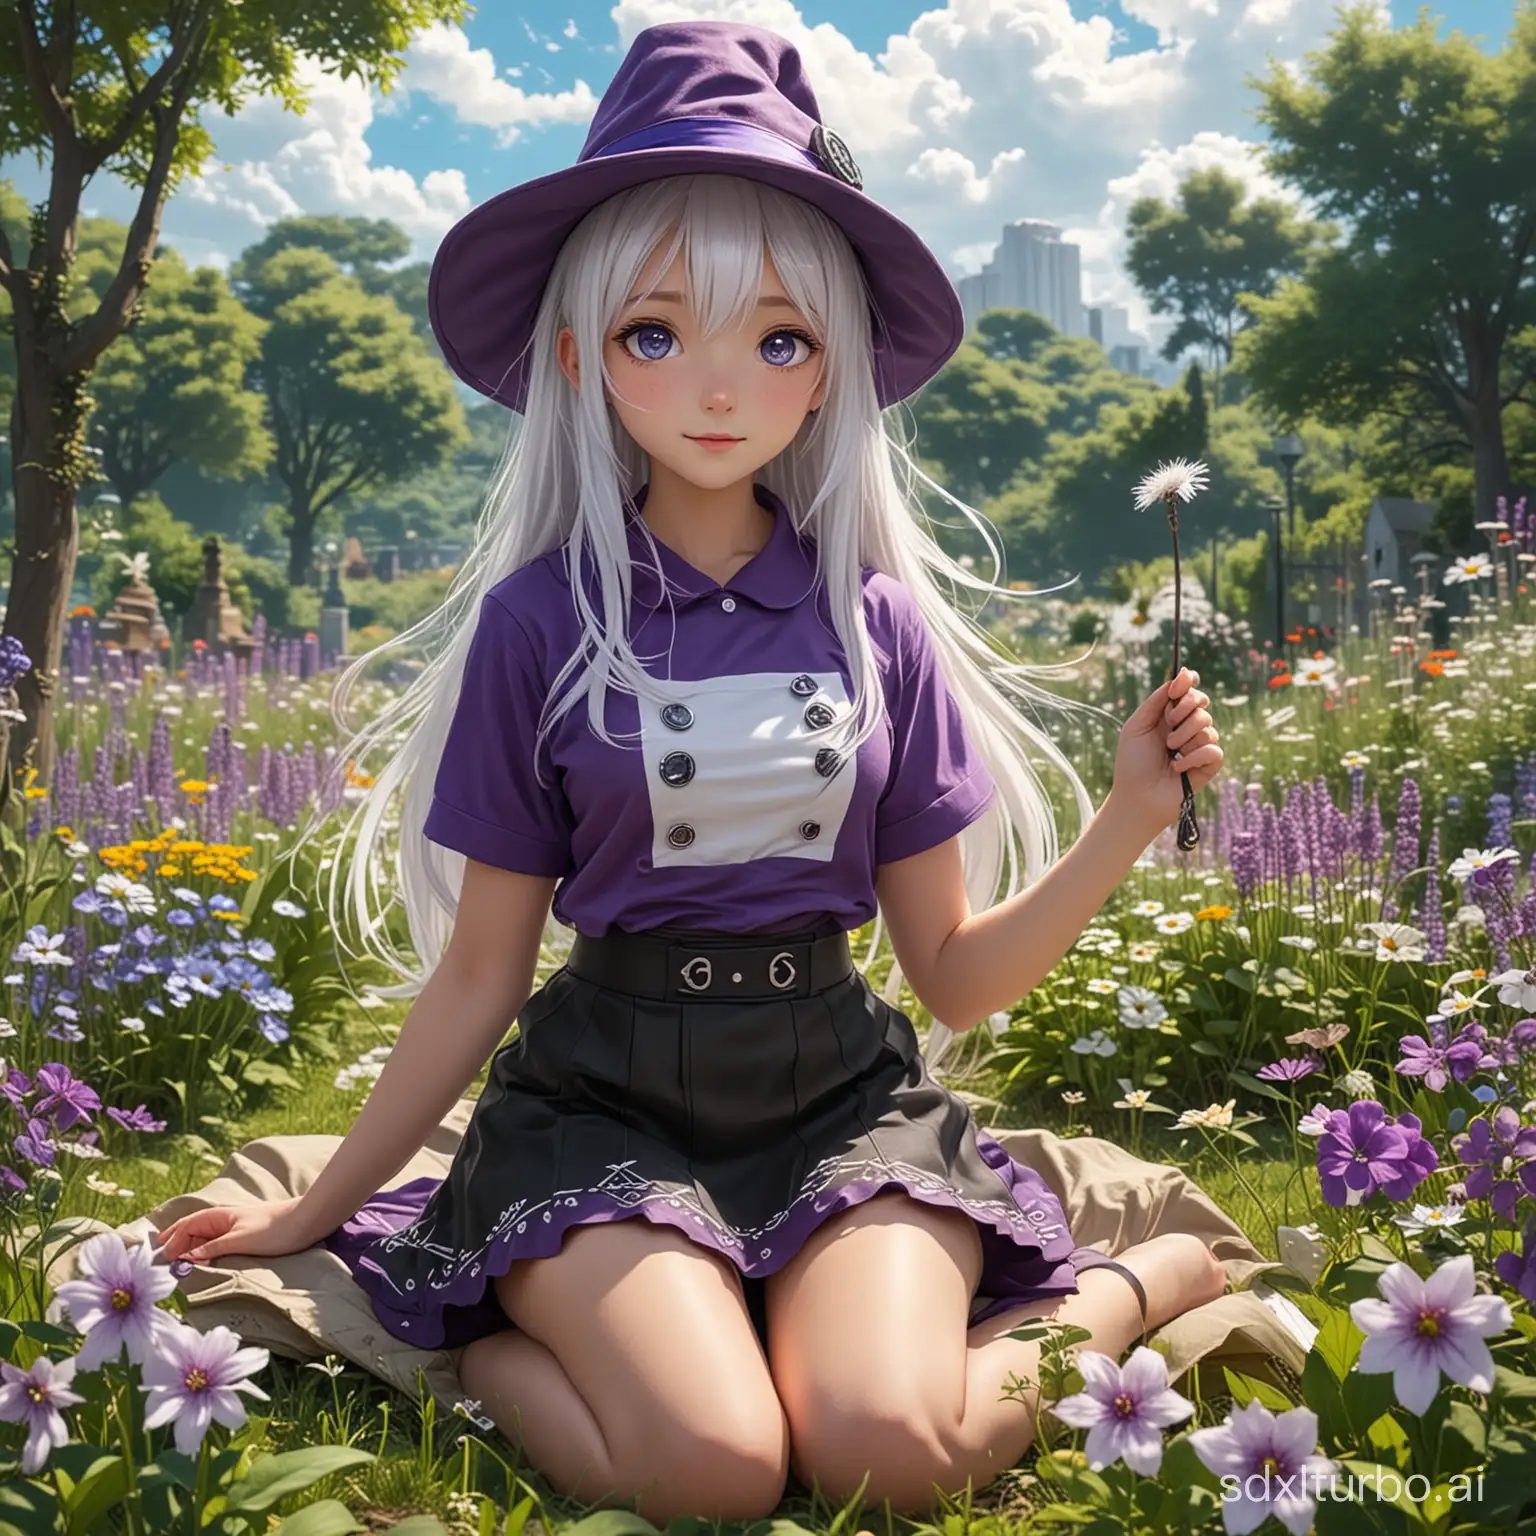 Anime-Girl-with-Magic-Wand-in-Enchanted-Garden